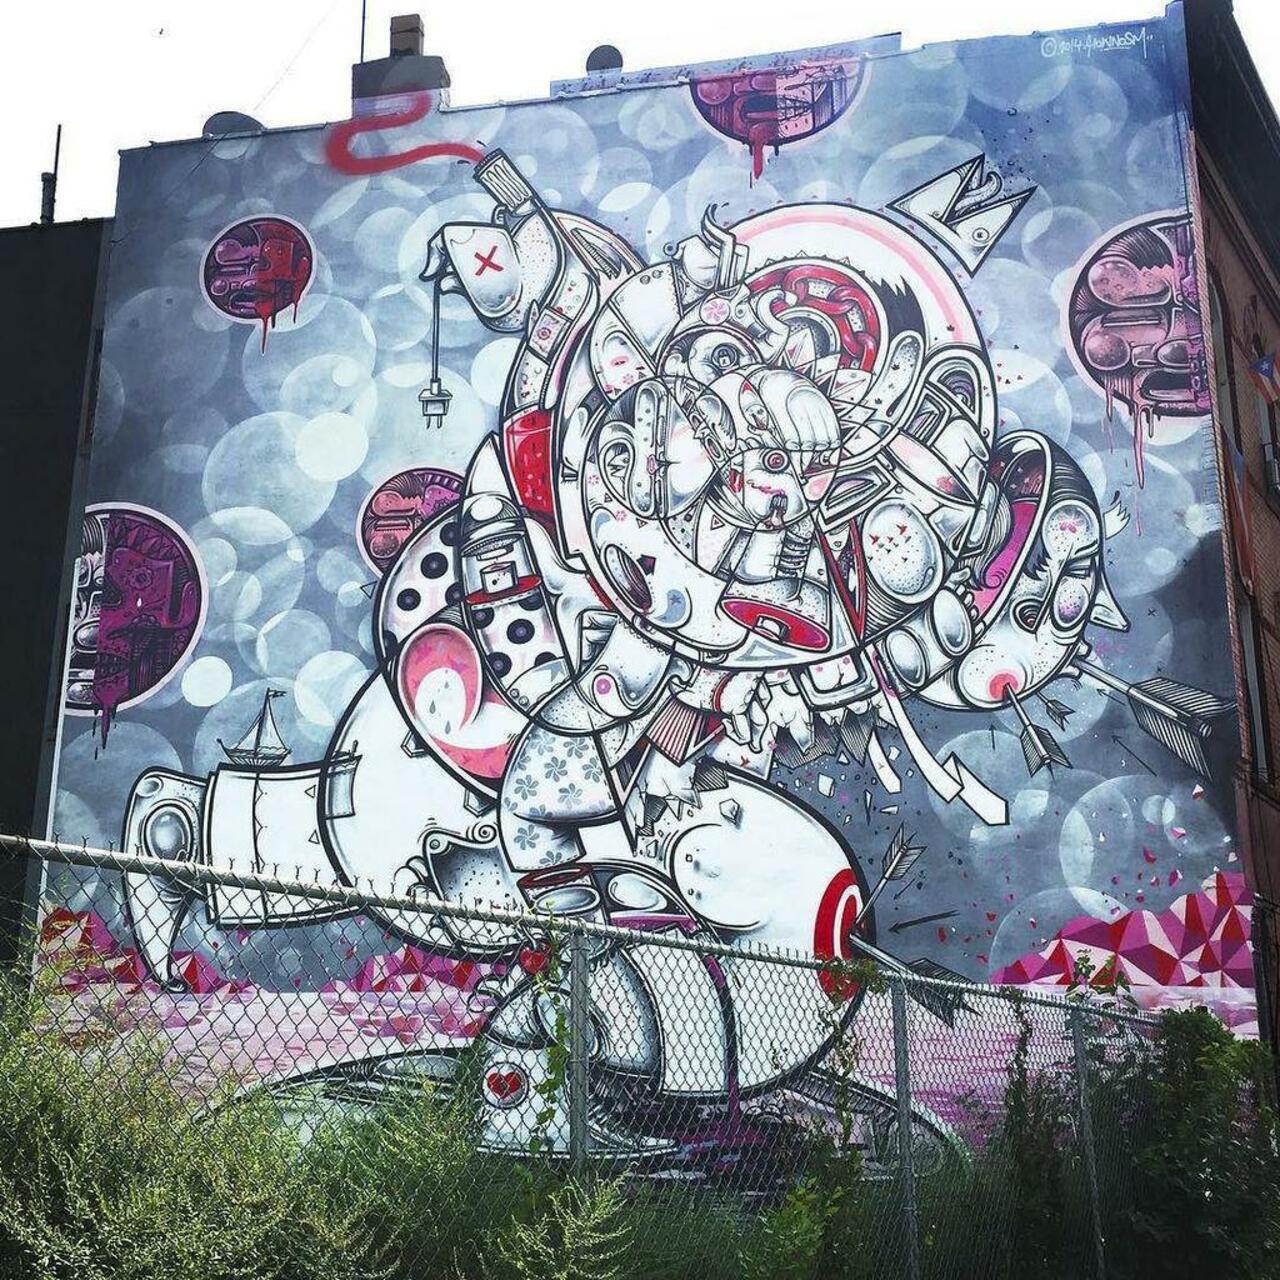 RT @StArtEverywhere: red hot summer day by @hownosm #streetz #streetart #graffiti #instagraffiti #urbanart #mural #street #streetphotogr… http://t.co/3t35soEEeY